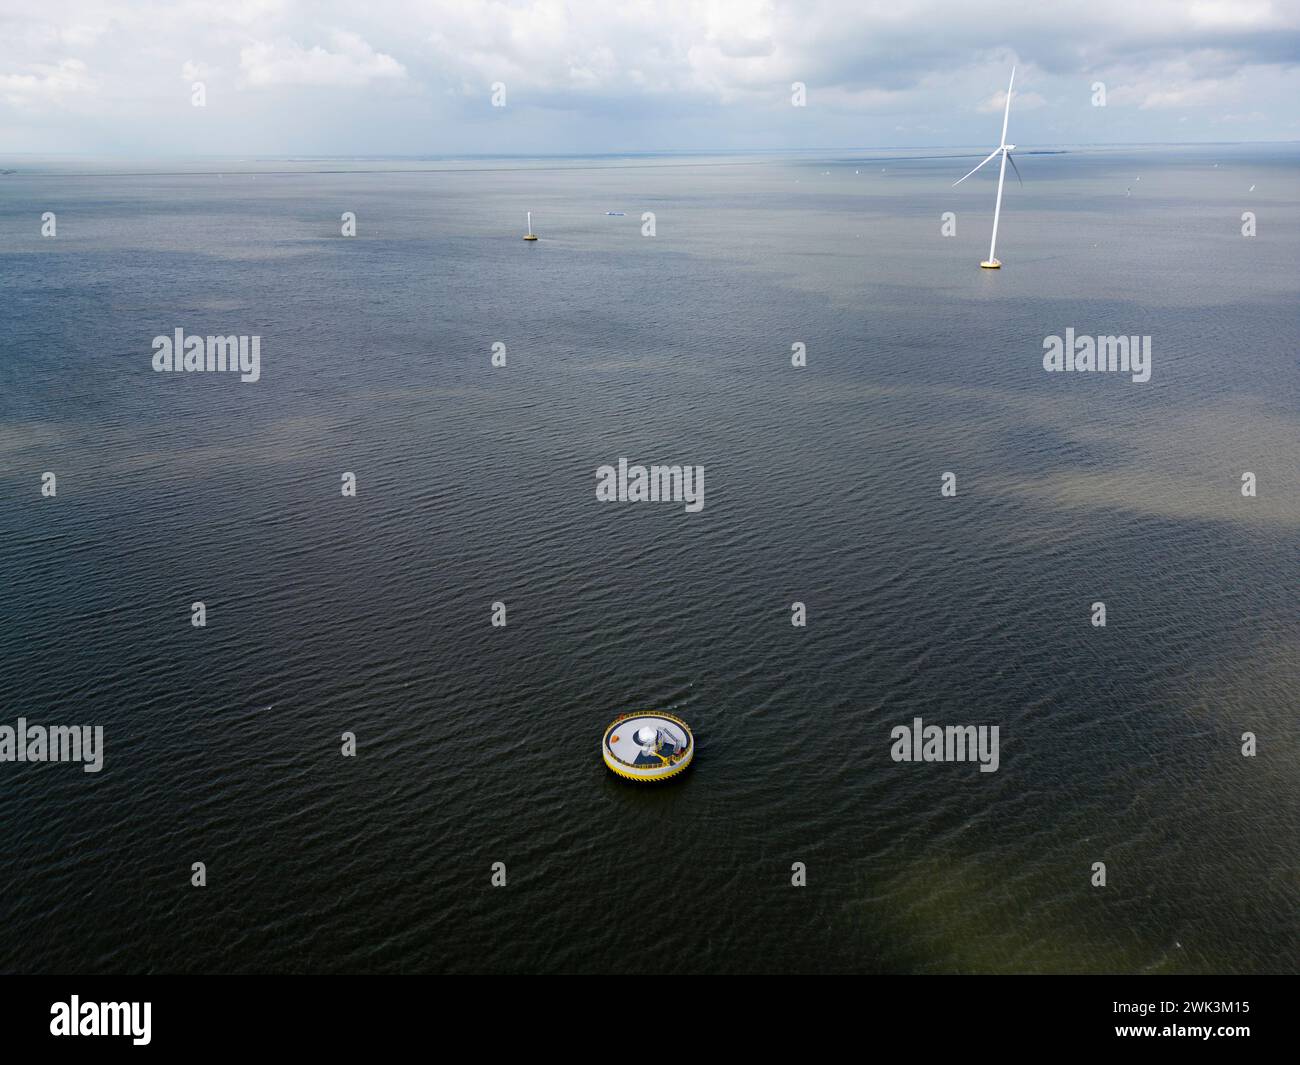 Construction of an offshore windpark, Ijsselmeer, The Netherlands Stock Photo